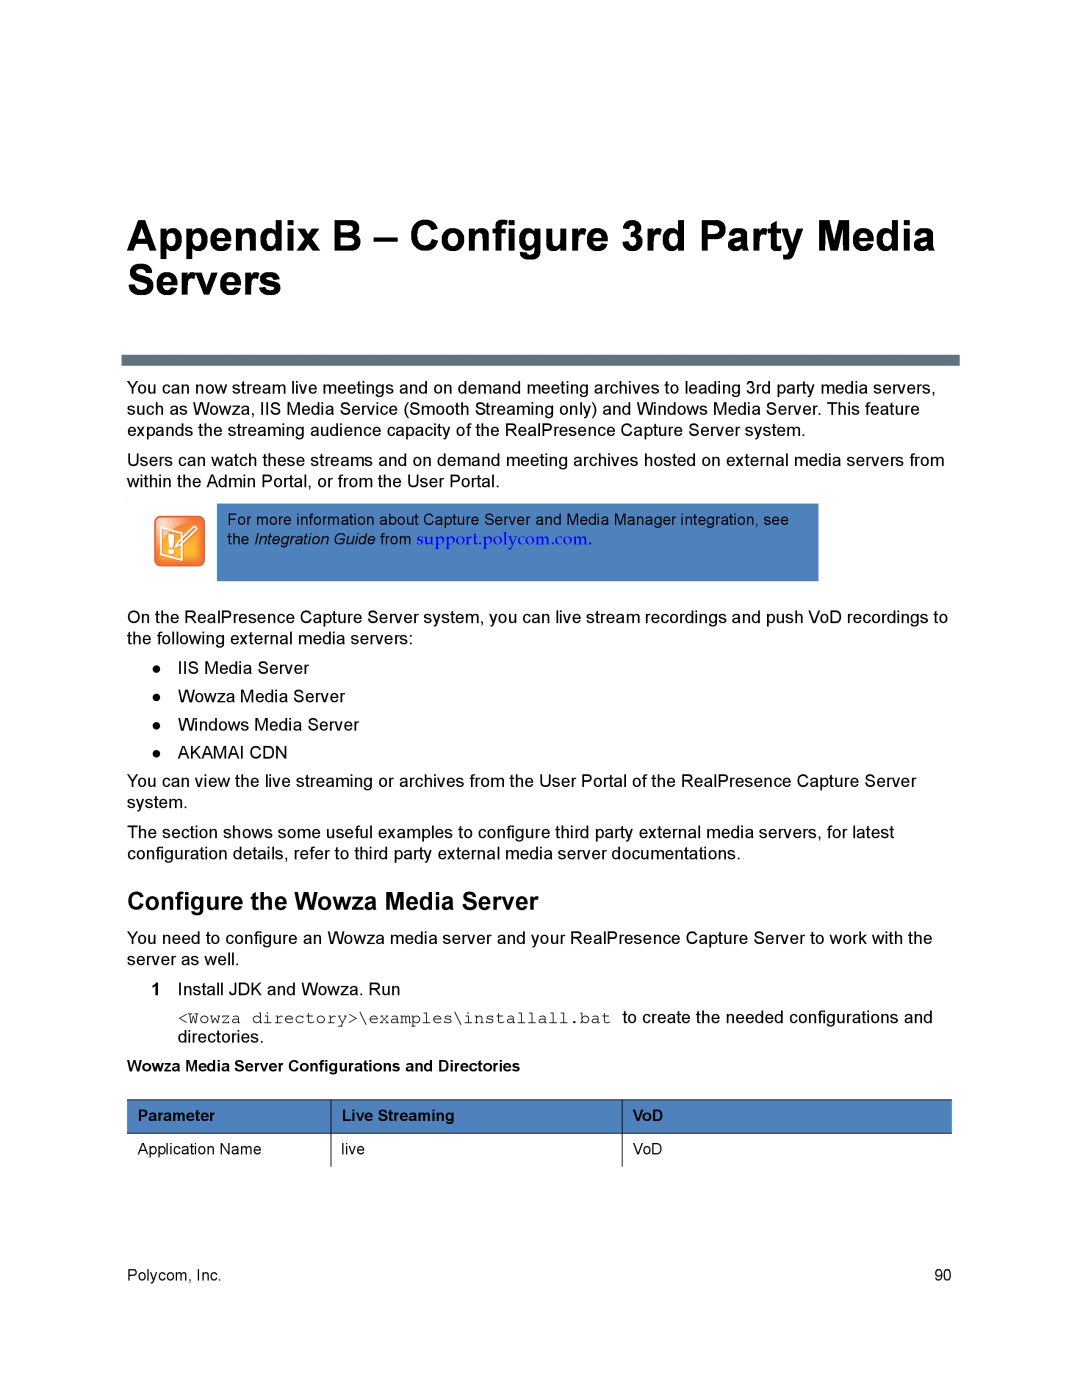 Polycom 40/0 manual Appendix B - Configure 3rd Party Media Servers, Configure the Wowza Media Server 